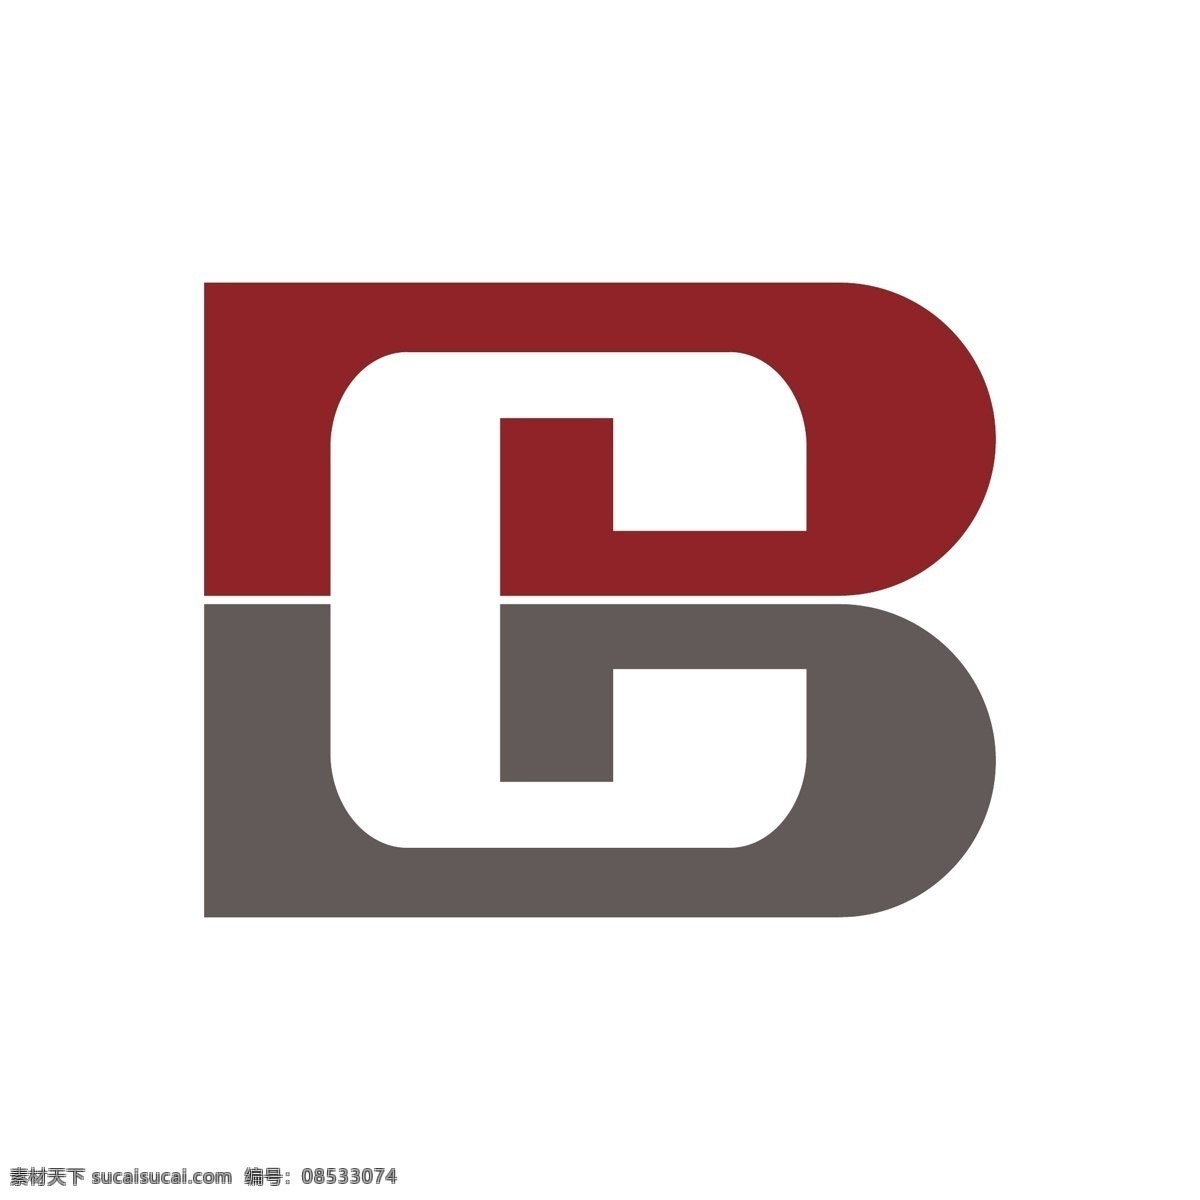 b 字母 造型 游戏类 logo 科技 标志 创意 公司 广告 互联网 科技logo 领域 多用途 标识 工业